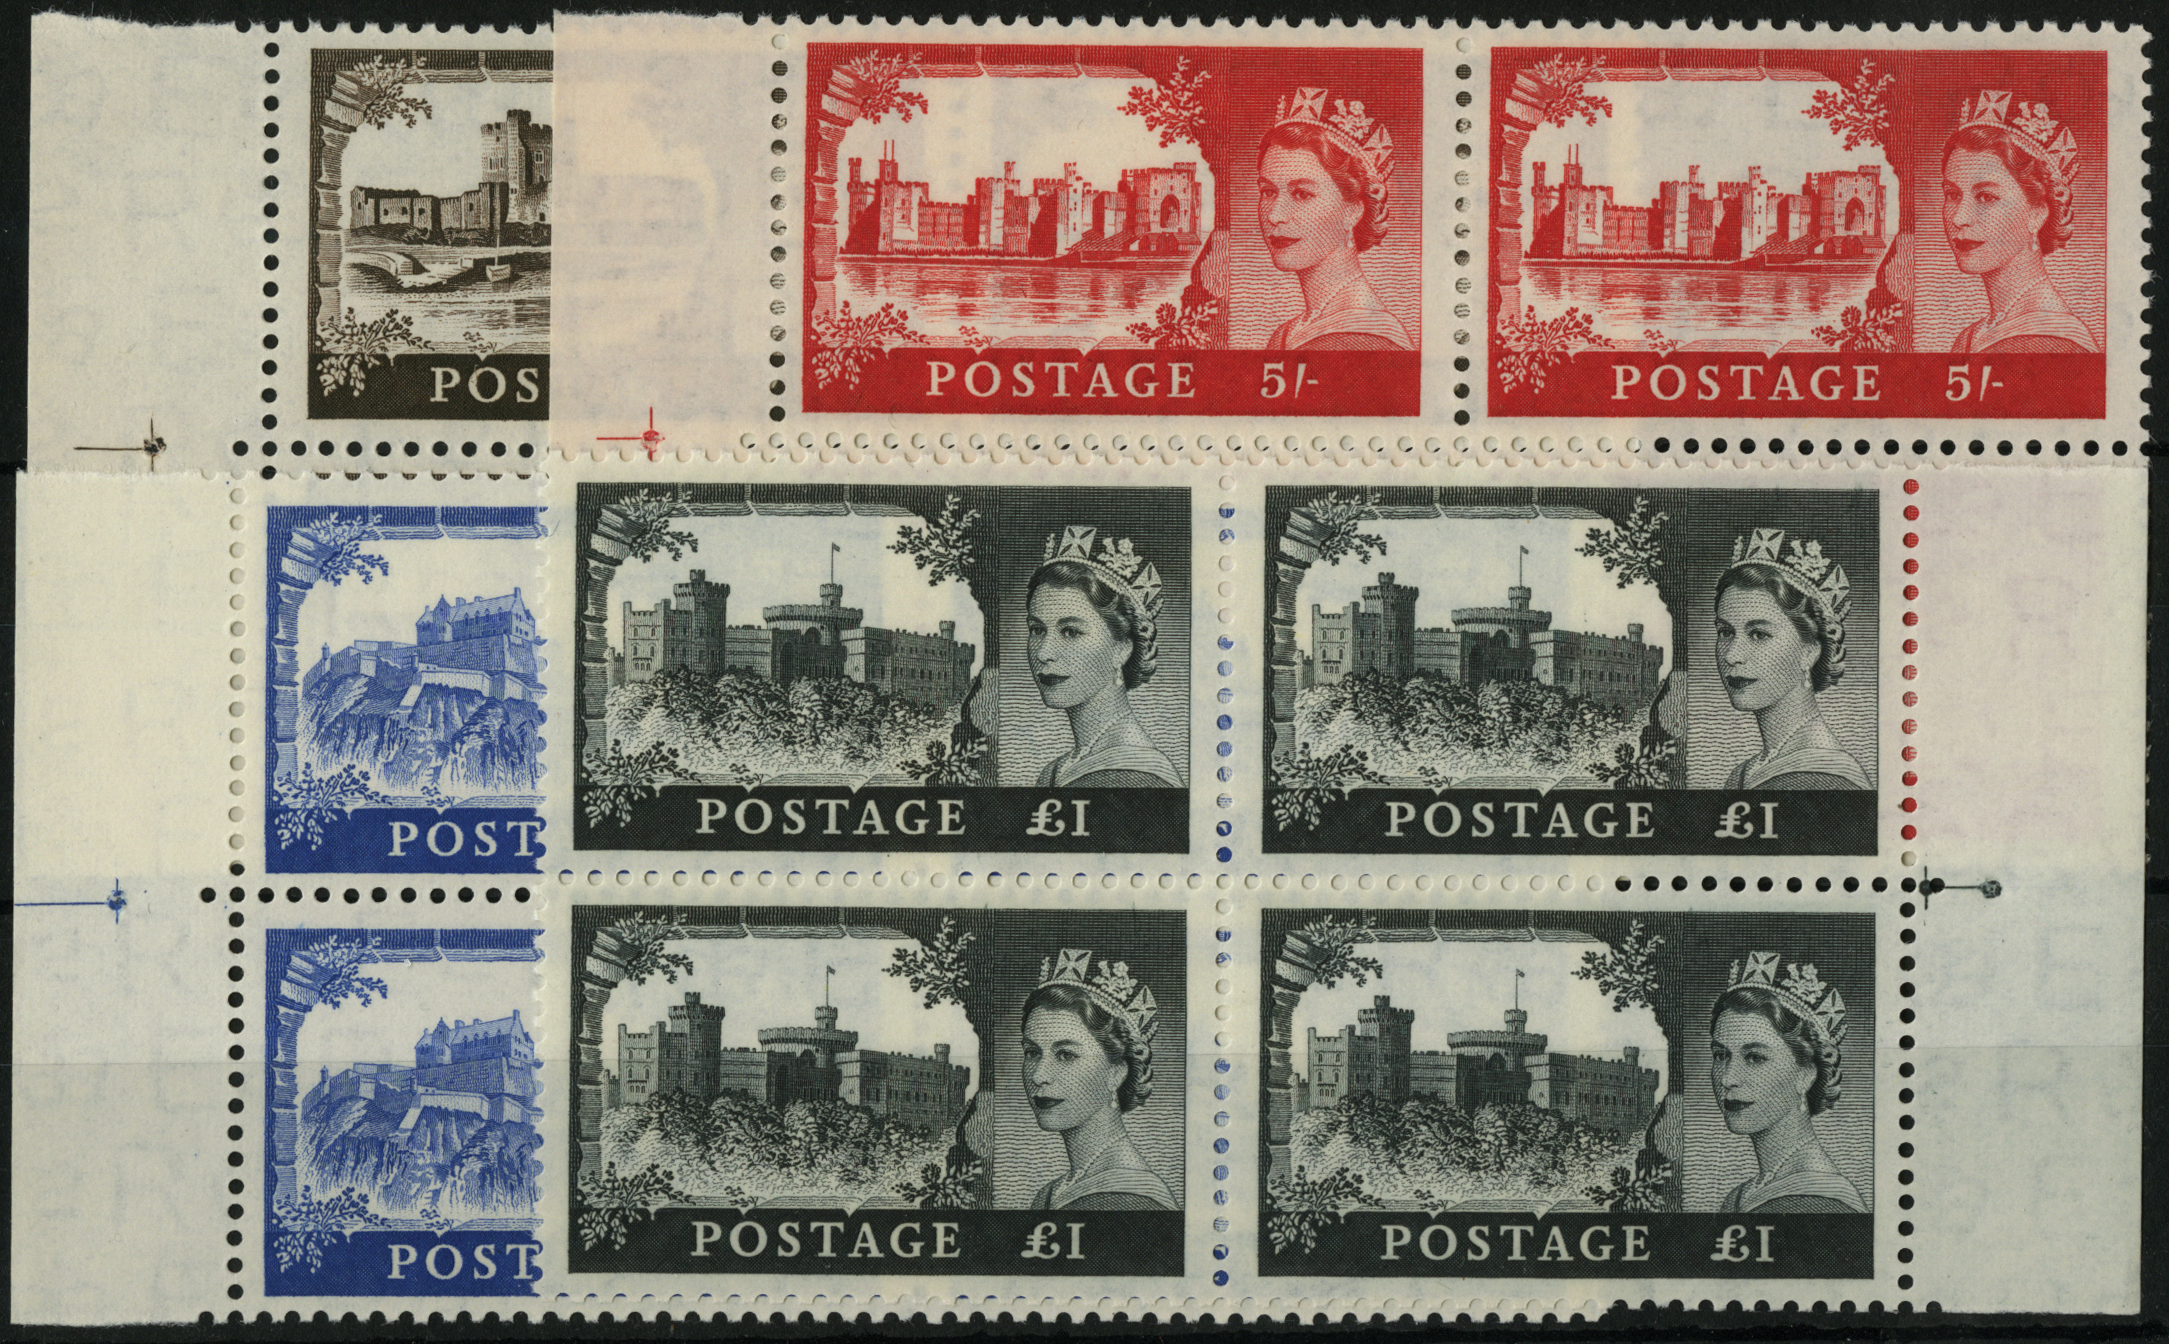 Great Britain. 1958 2/6d - £1 De La Rue high value set of four in unmounted mint marginal blocks